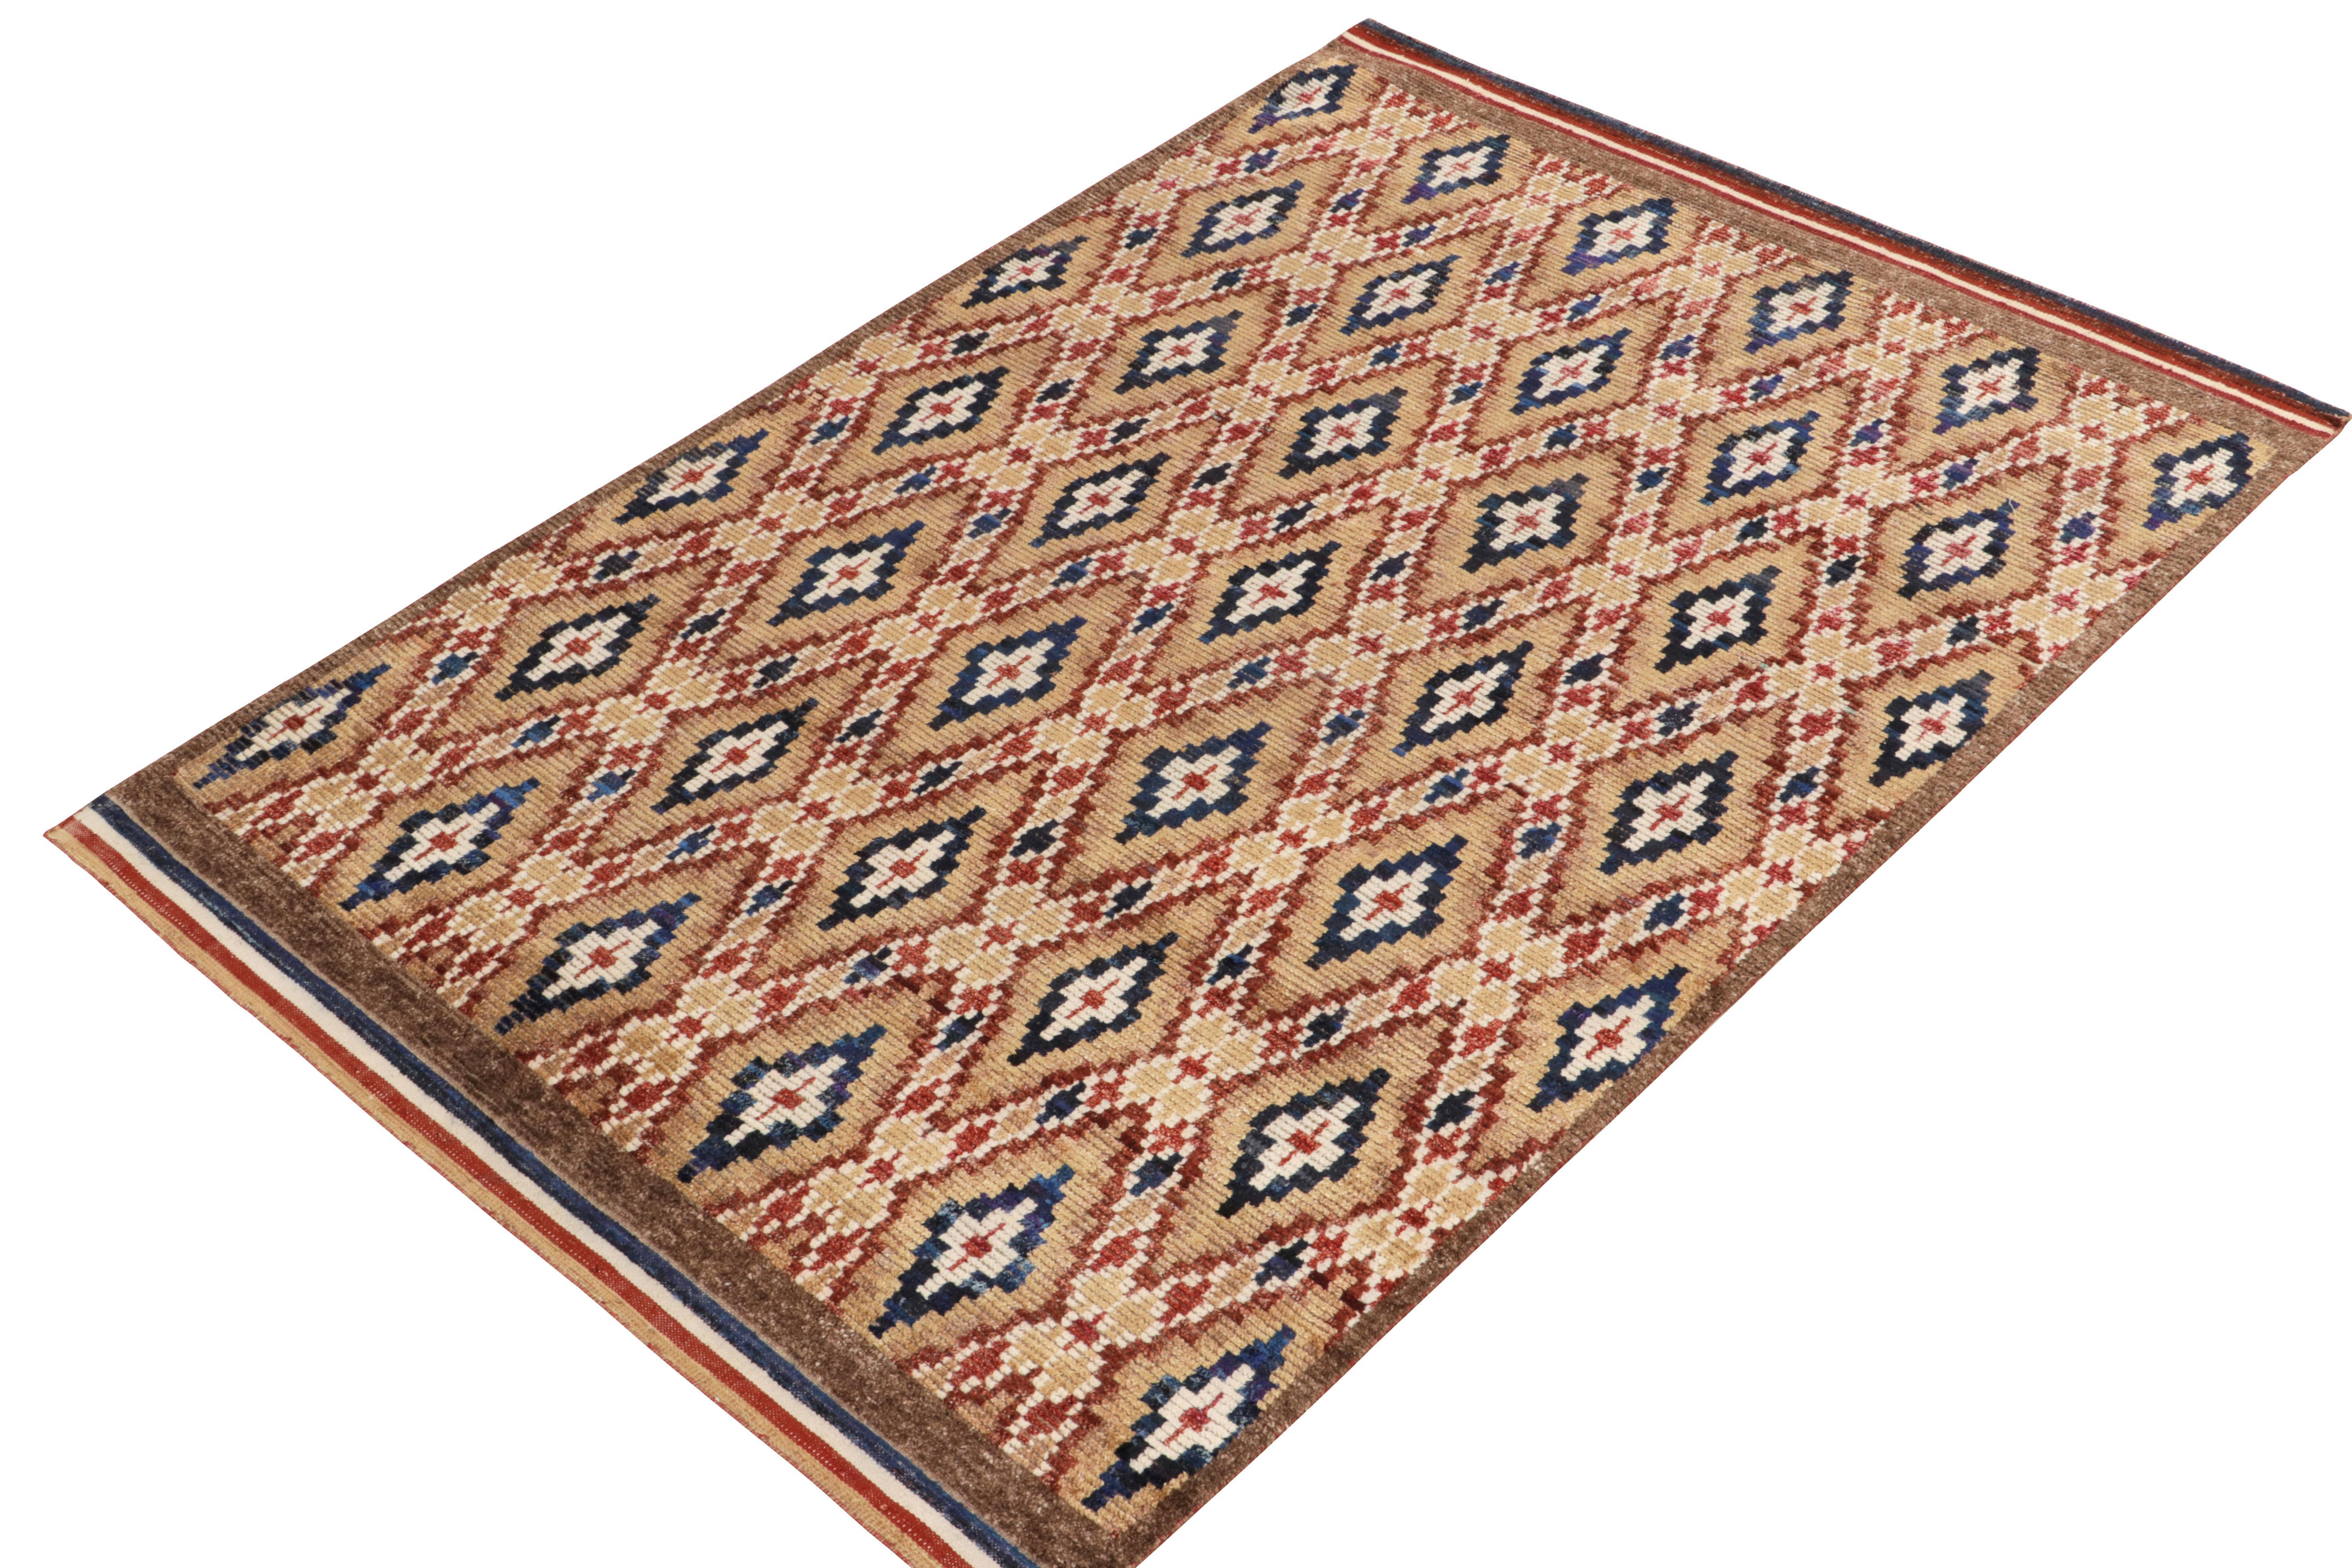 Tribal Rug & Kilim's Moroccan Style Rug in Beige-Brown, Red and Blue Diamond Patterns (tapis de style marocain à motifs de diamants beige, marron, rouge et bleu) en vente